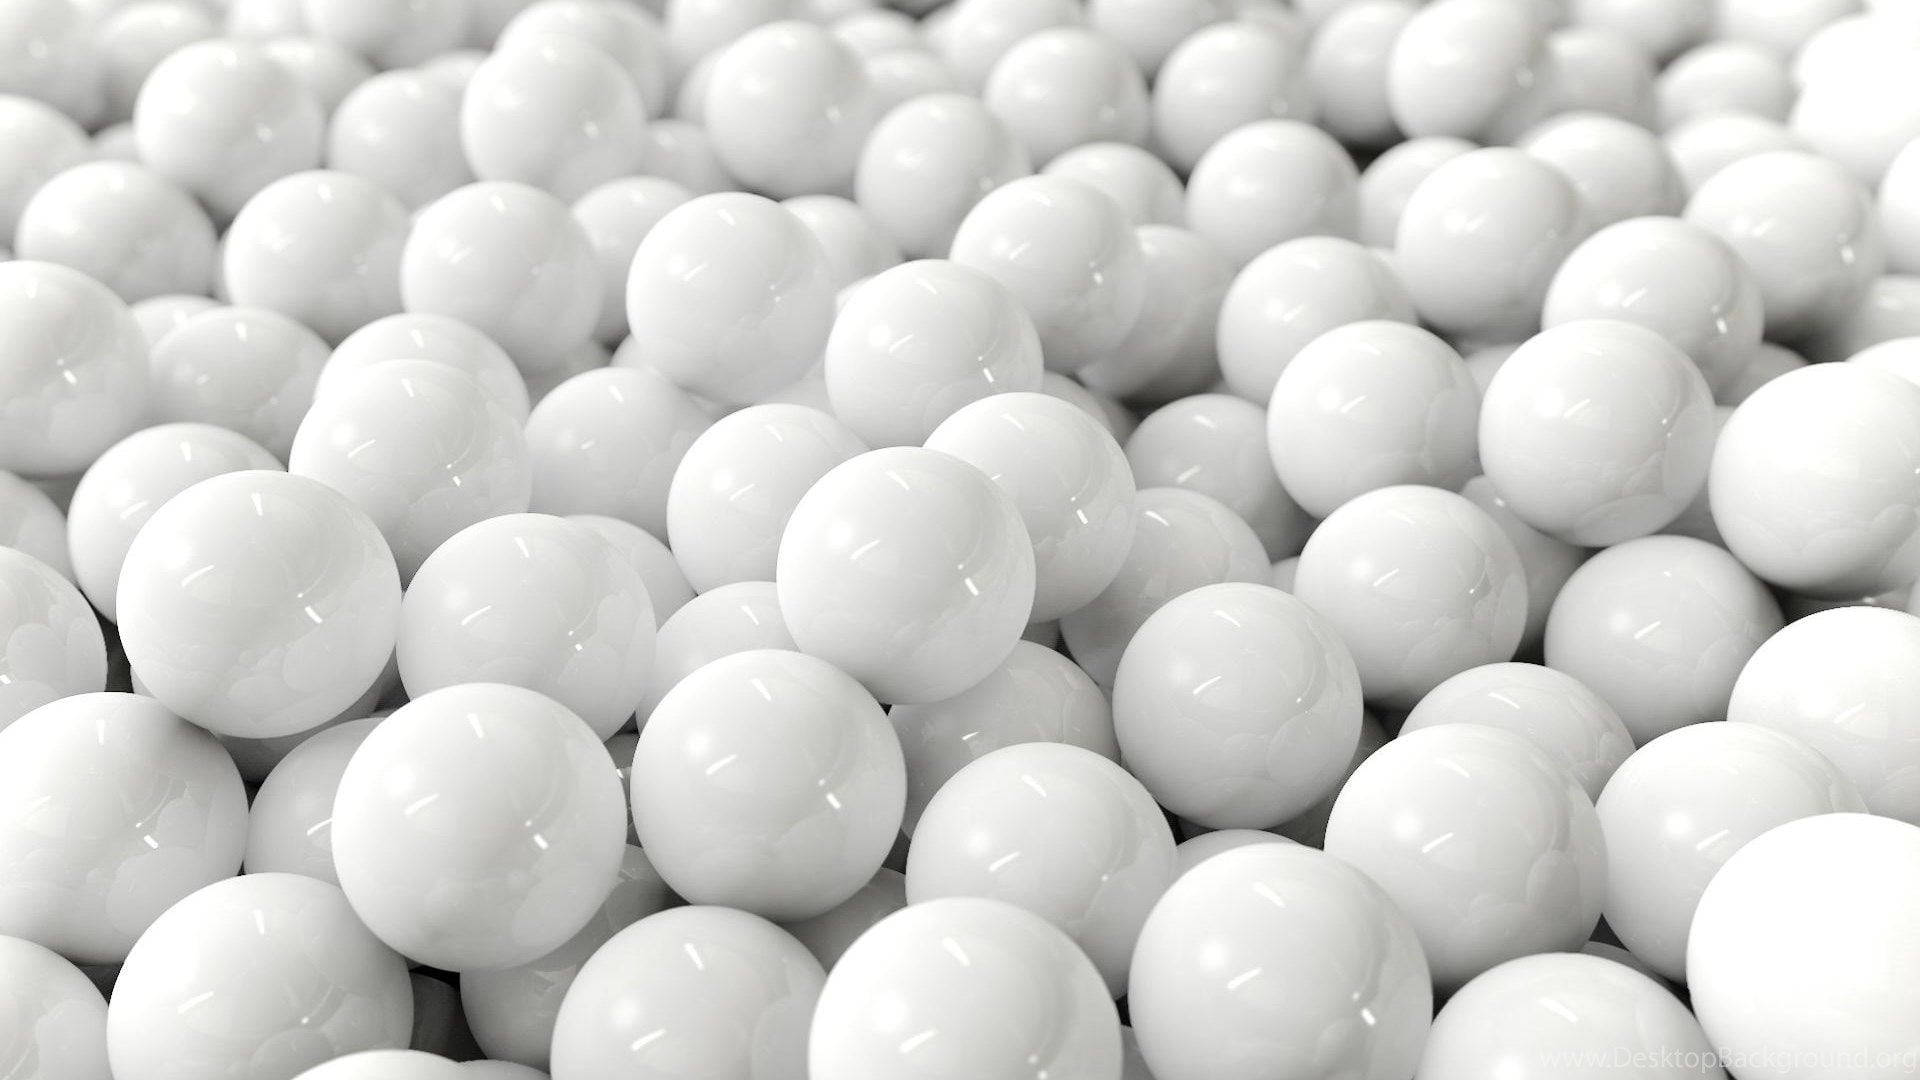 Cool White Balls Picture